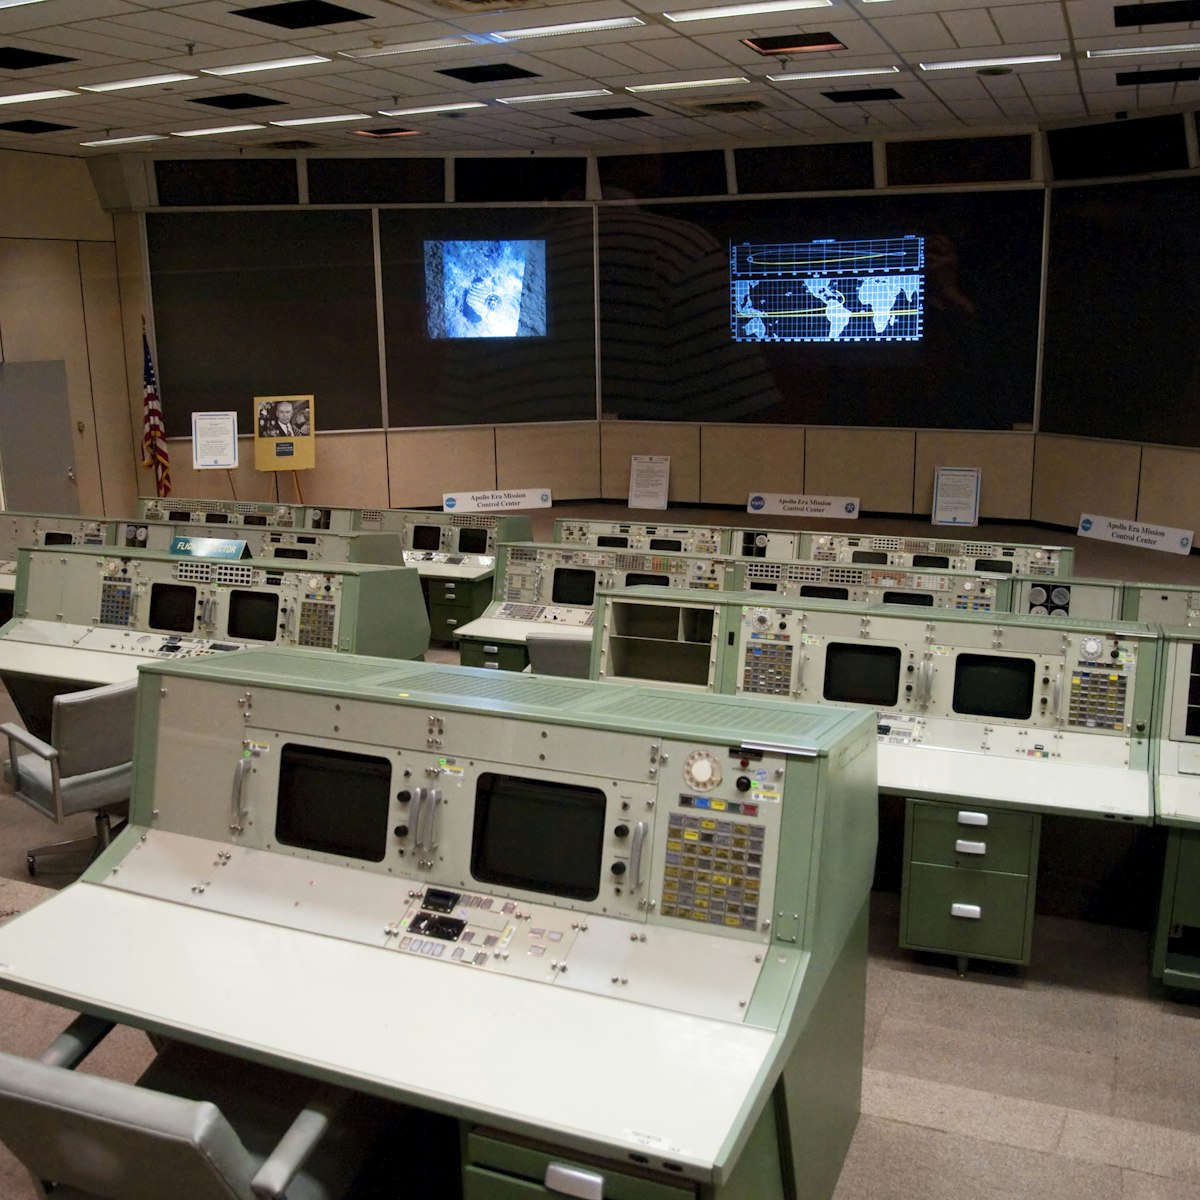 Apollo Era Mission Control Center, NASA Space Center Houston, Johnson Space Center.